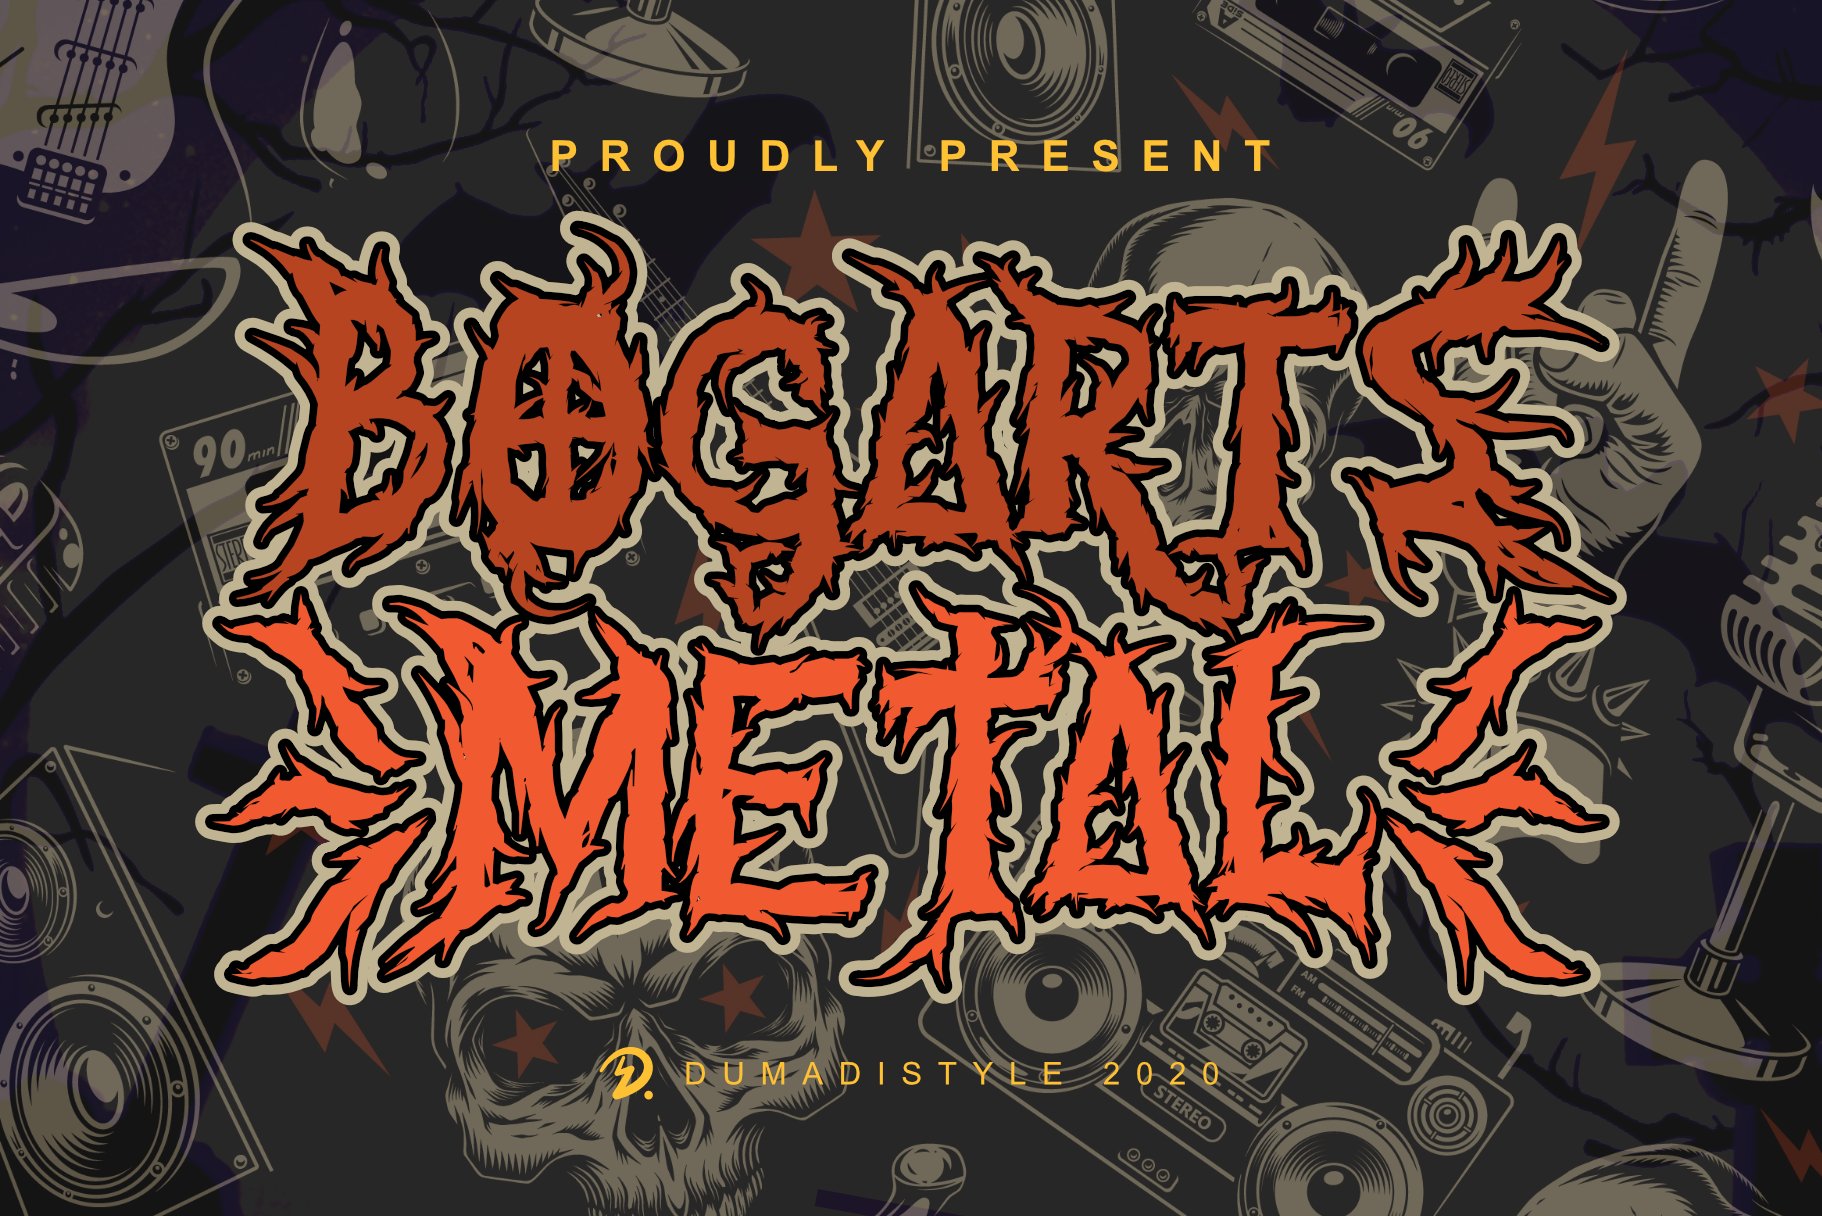 Bogarts Metal cover image.